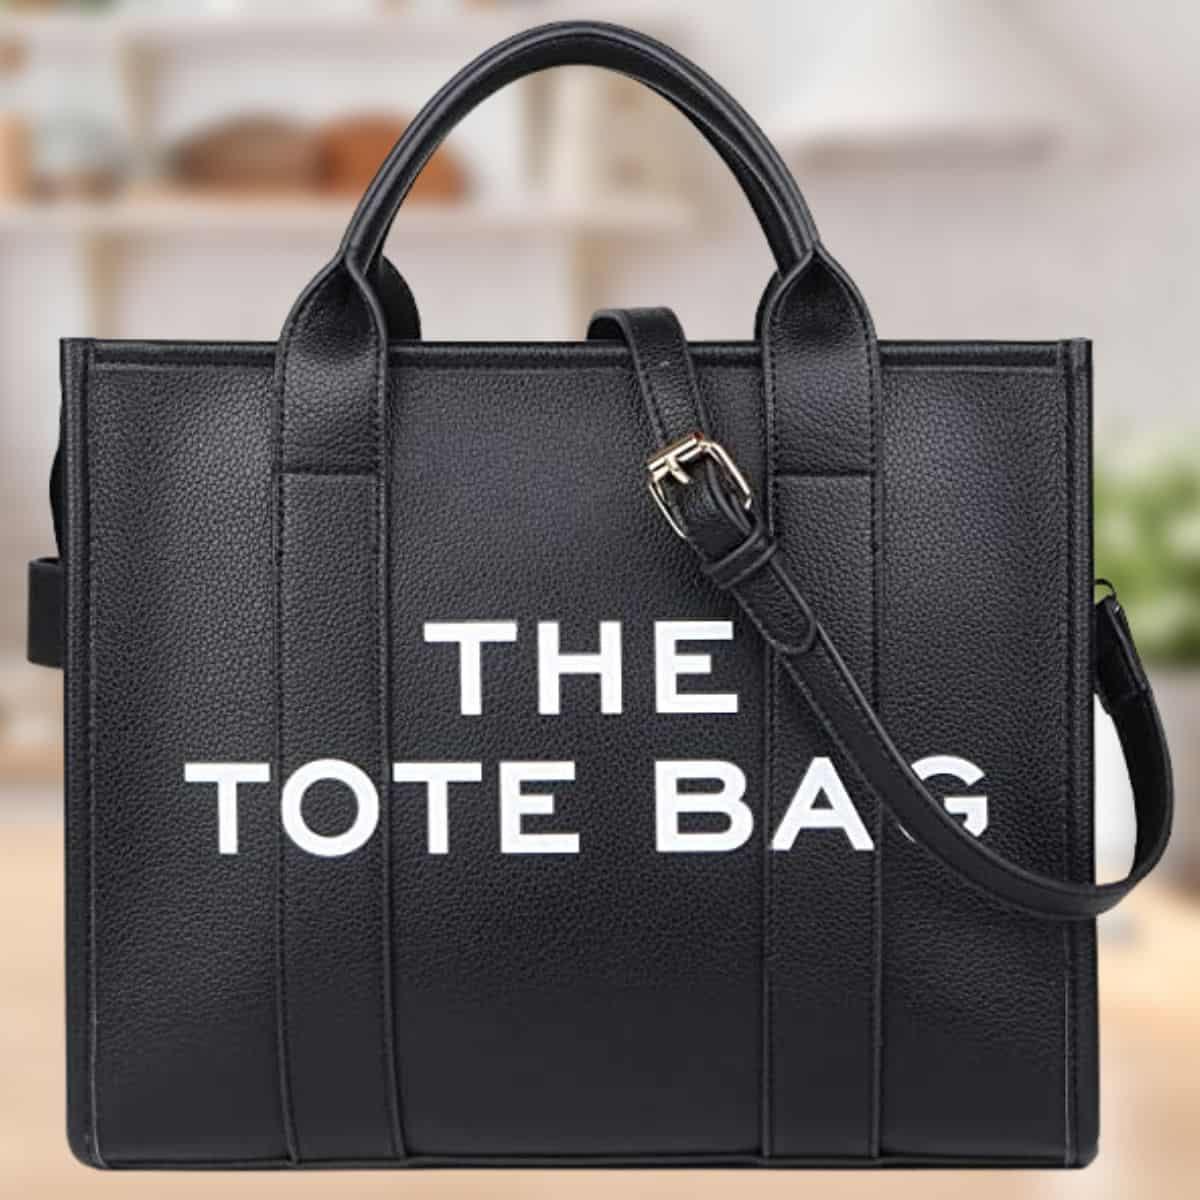 The Tote Bag Lookalike - Oh Happy Joy!